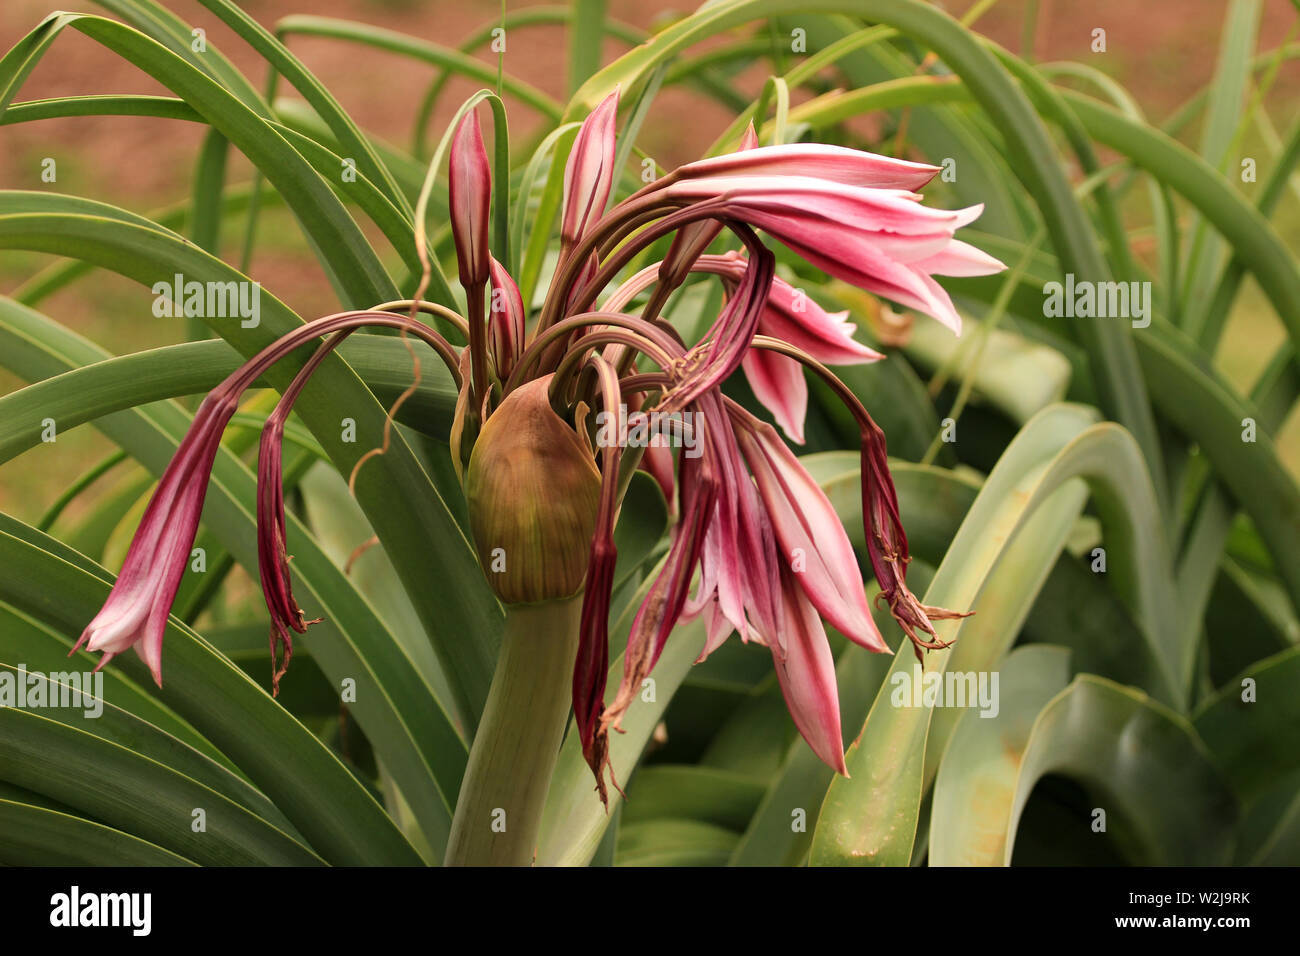 Ornamental plants - Crinum sp. in blossom Stock Photo